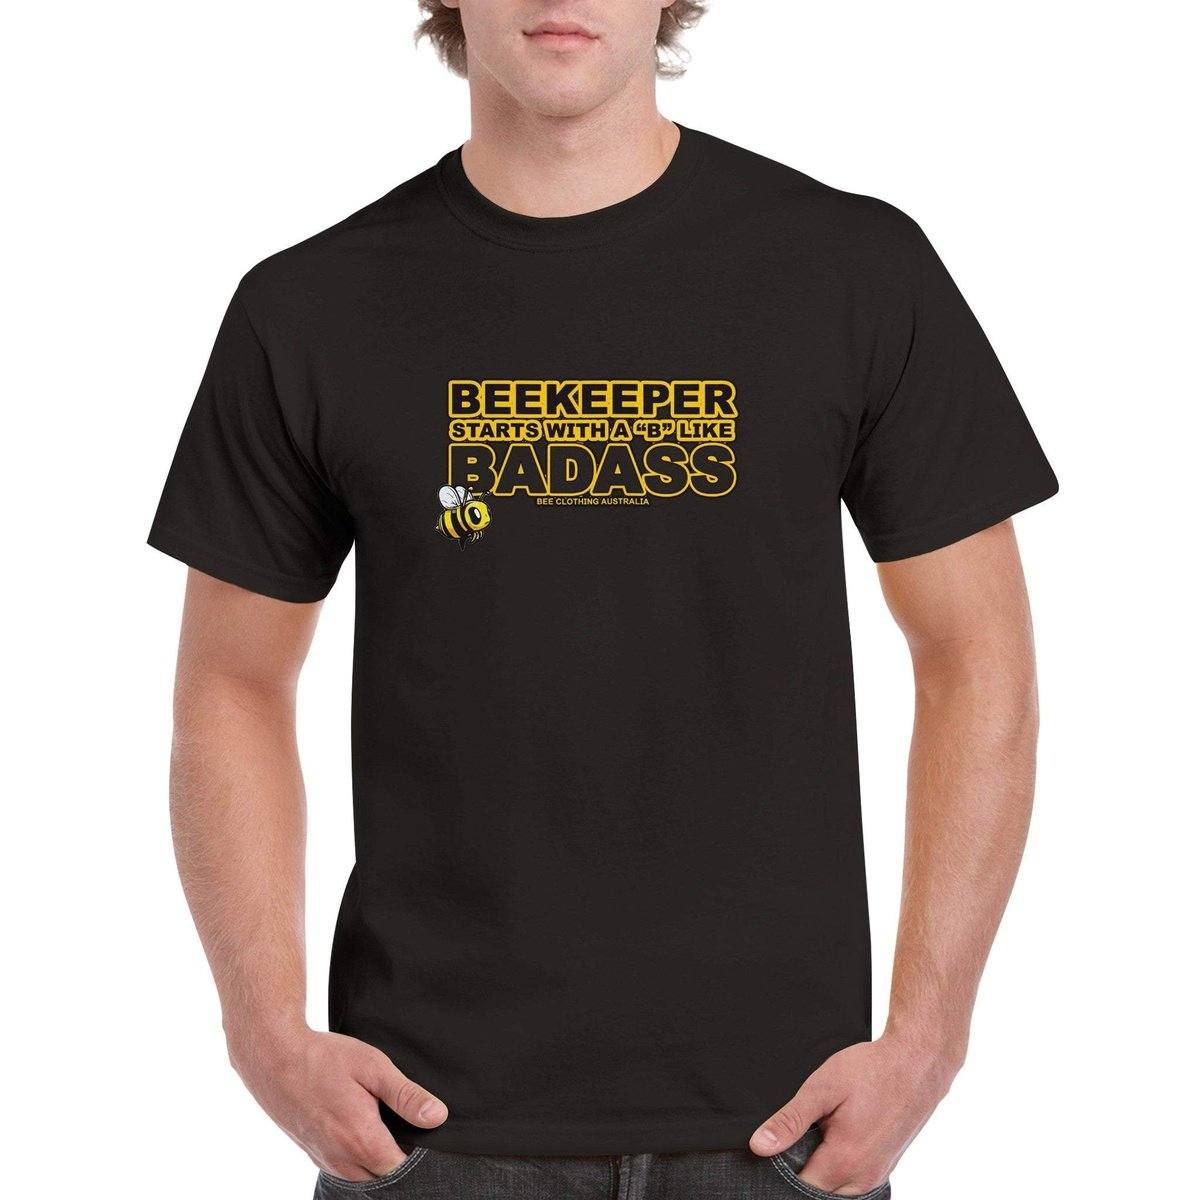 Beekeeper Starts With a B Like BADASS T-Shirt - Badass beekeeper Tshirt - Unisex Crewneck T-shirt Adults T-Shirts Unisex Black / S Bee Clothing Australia